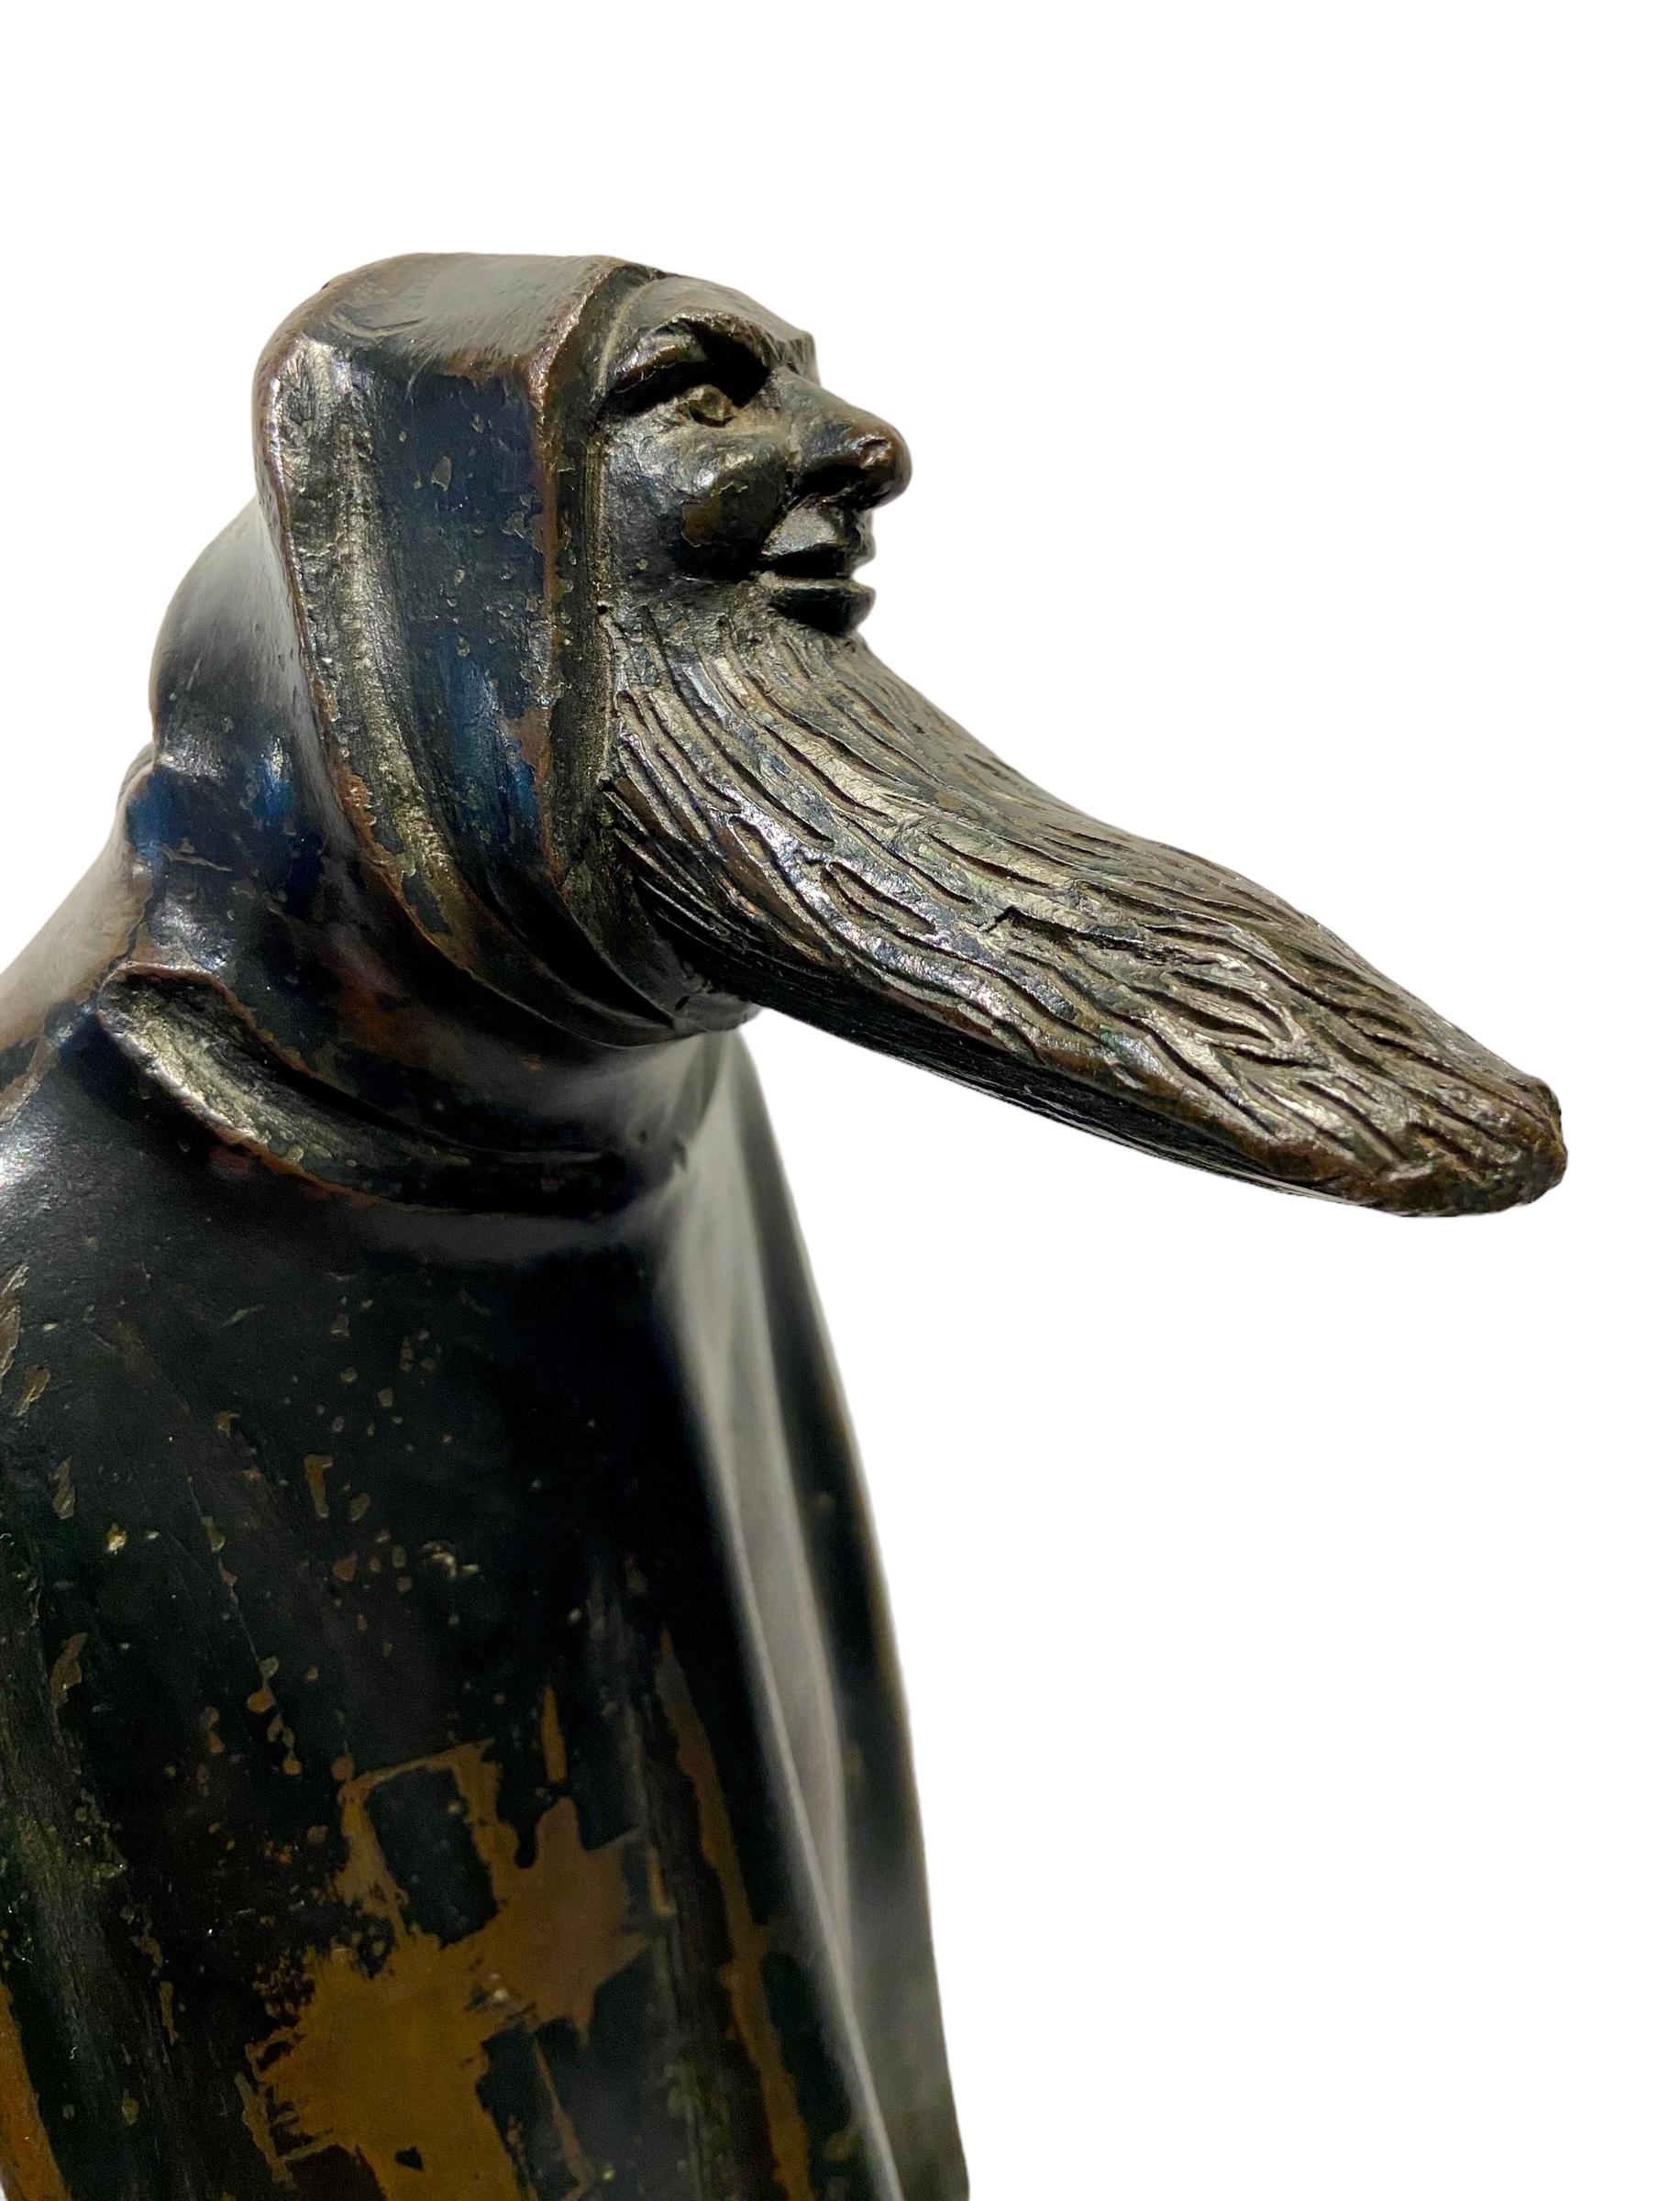 Scandinavian Savage or folk story figure in bronze. For Sale